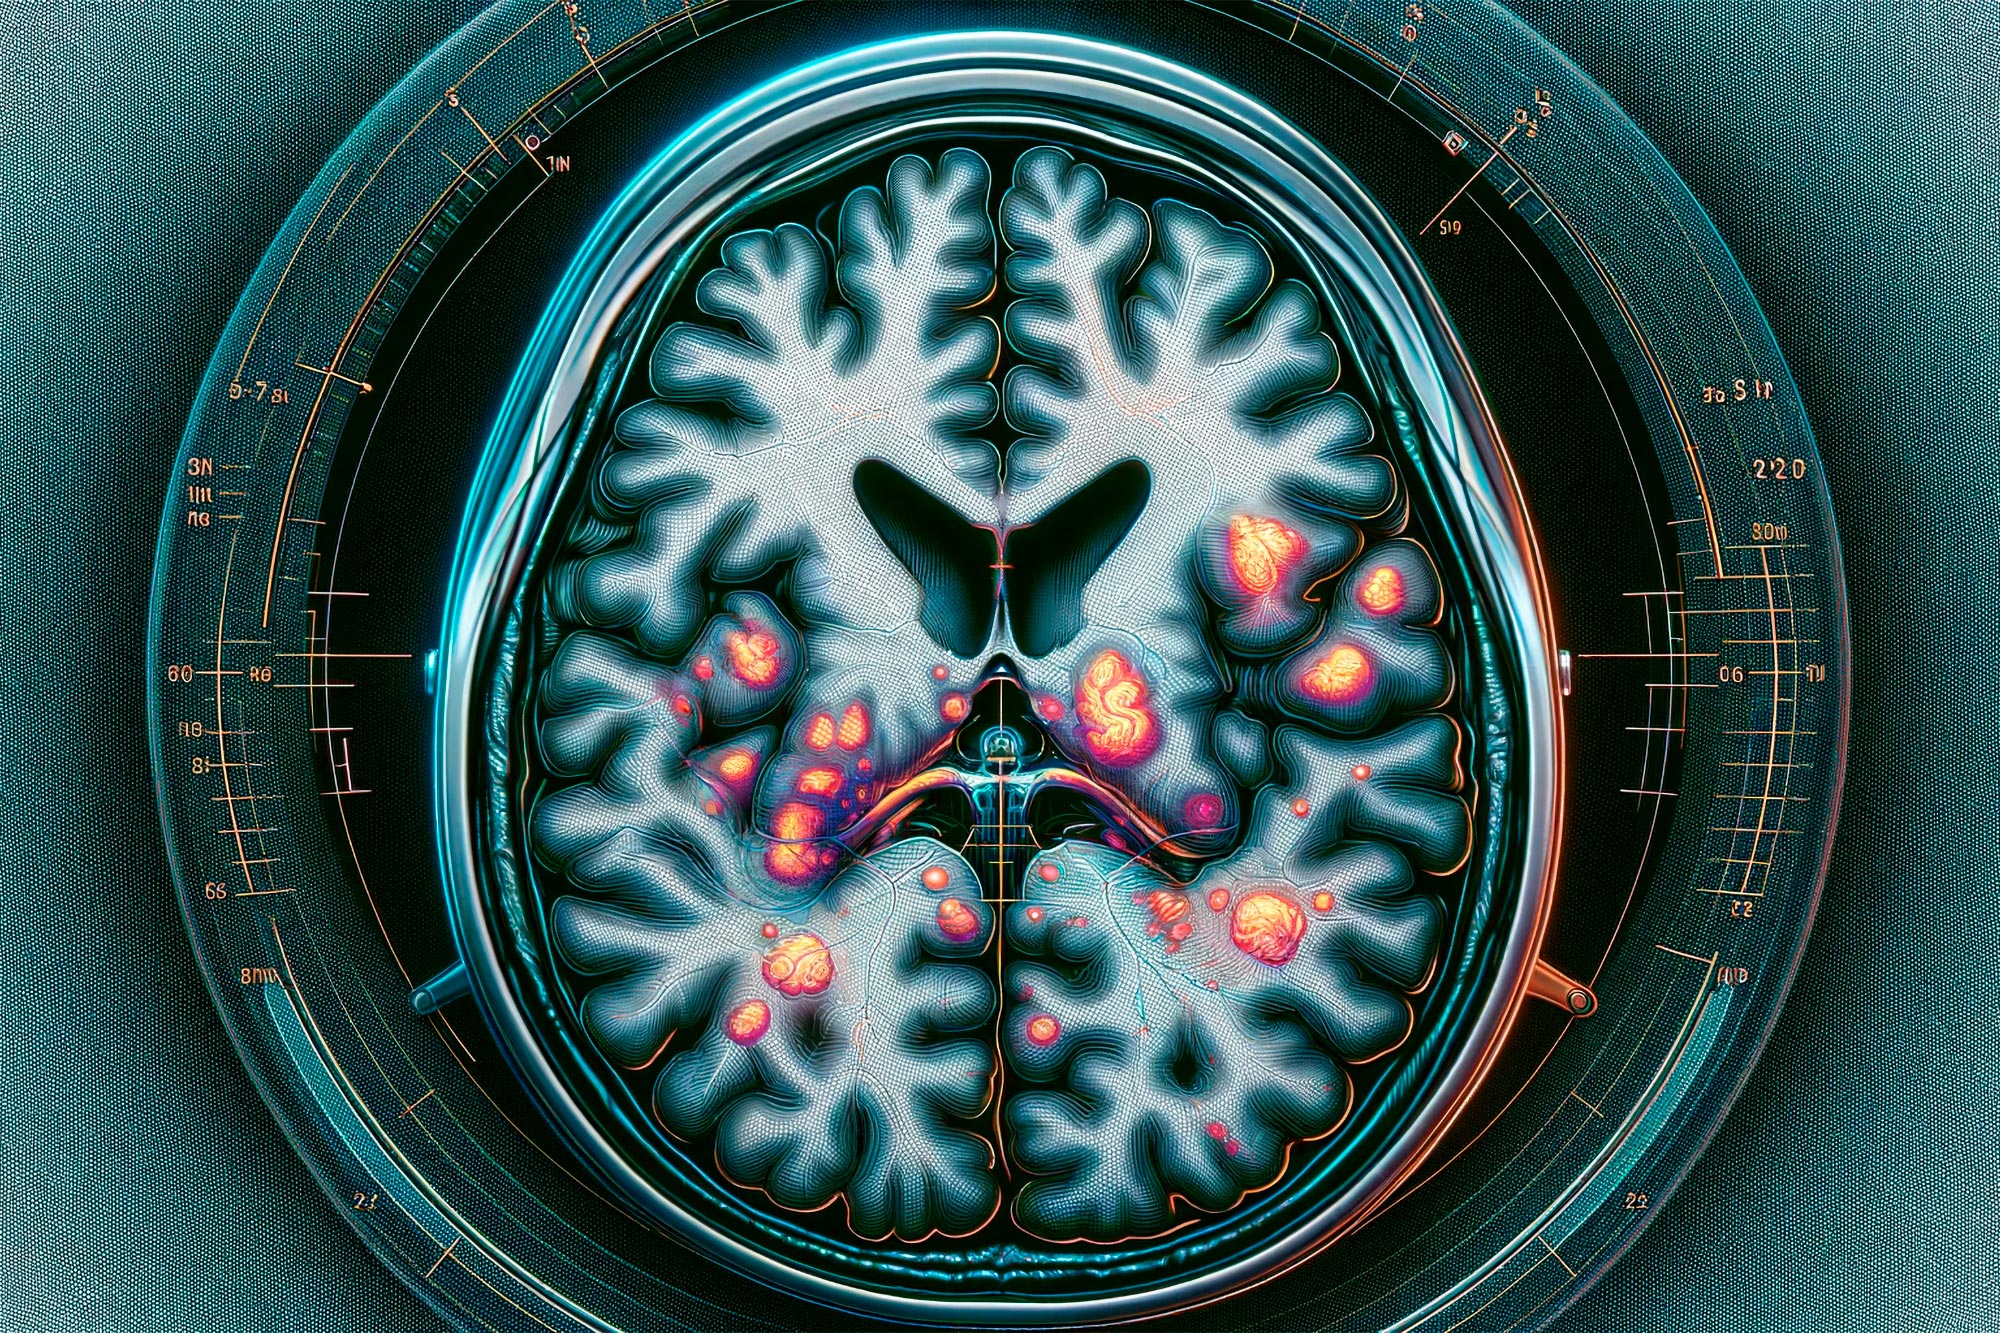 Advanced MRI Reveals Key Changes